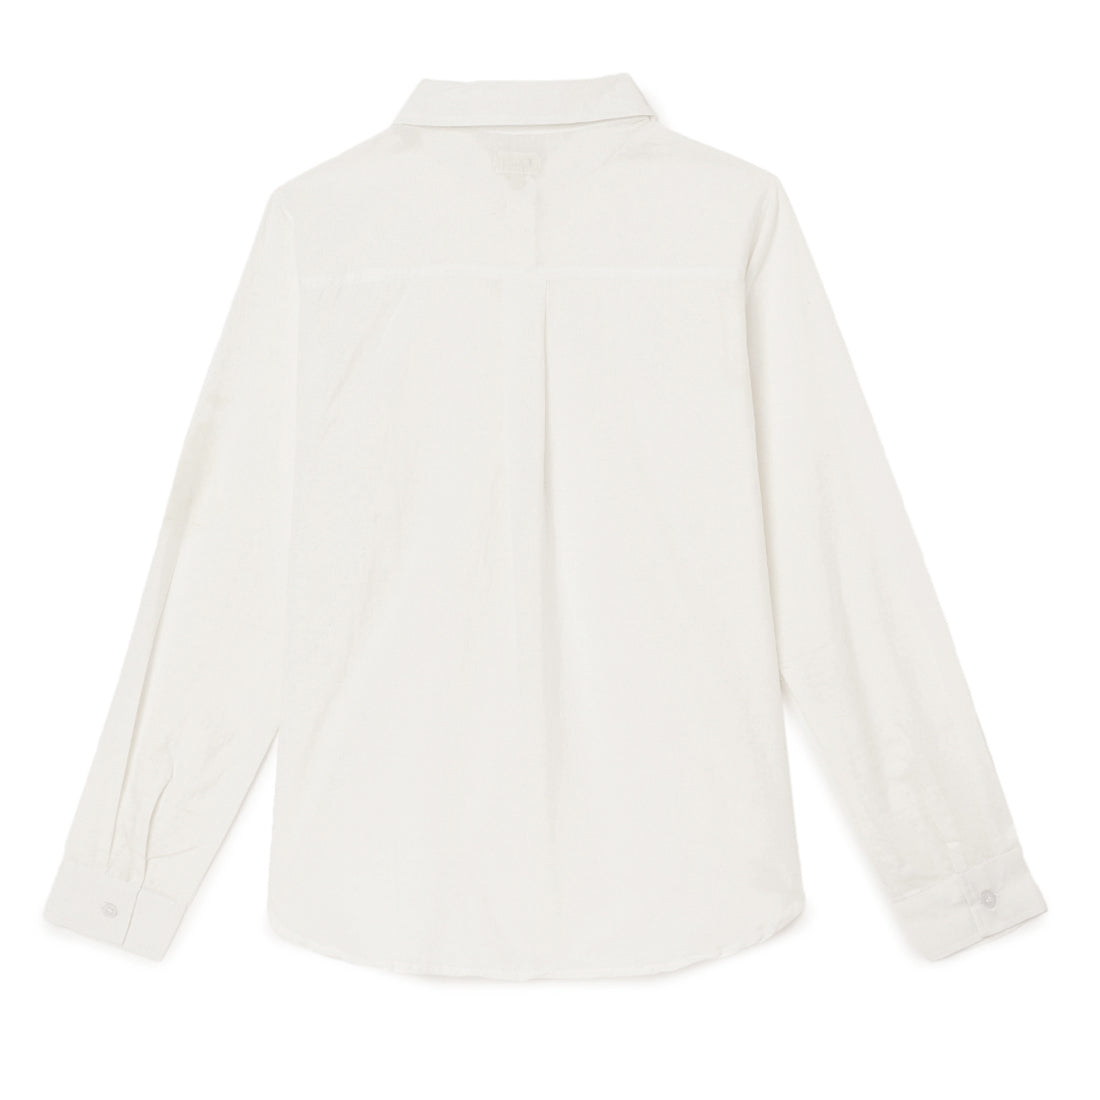 Women's Basic Cotton Shirt White - Back